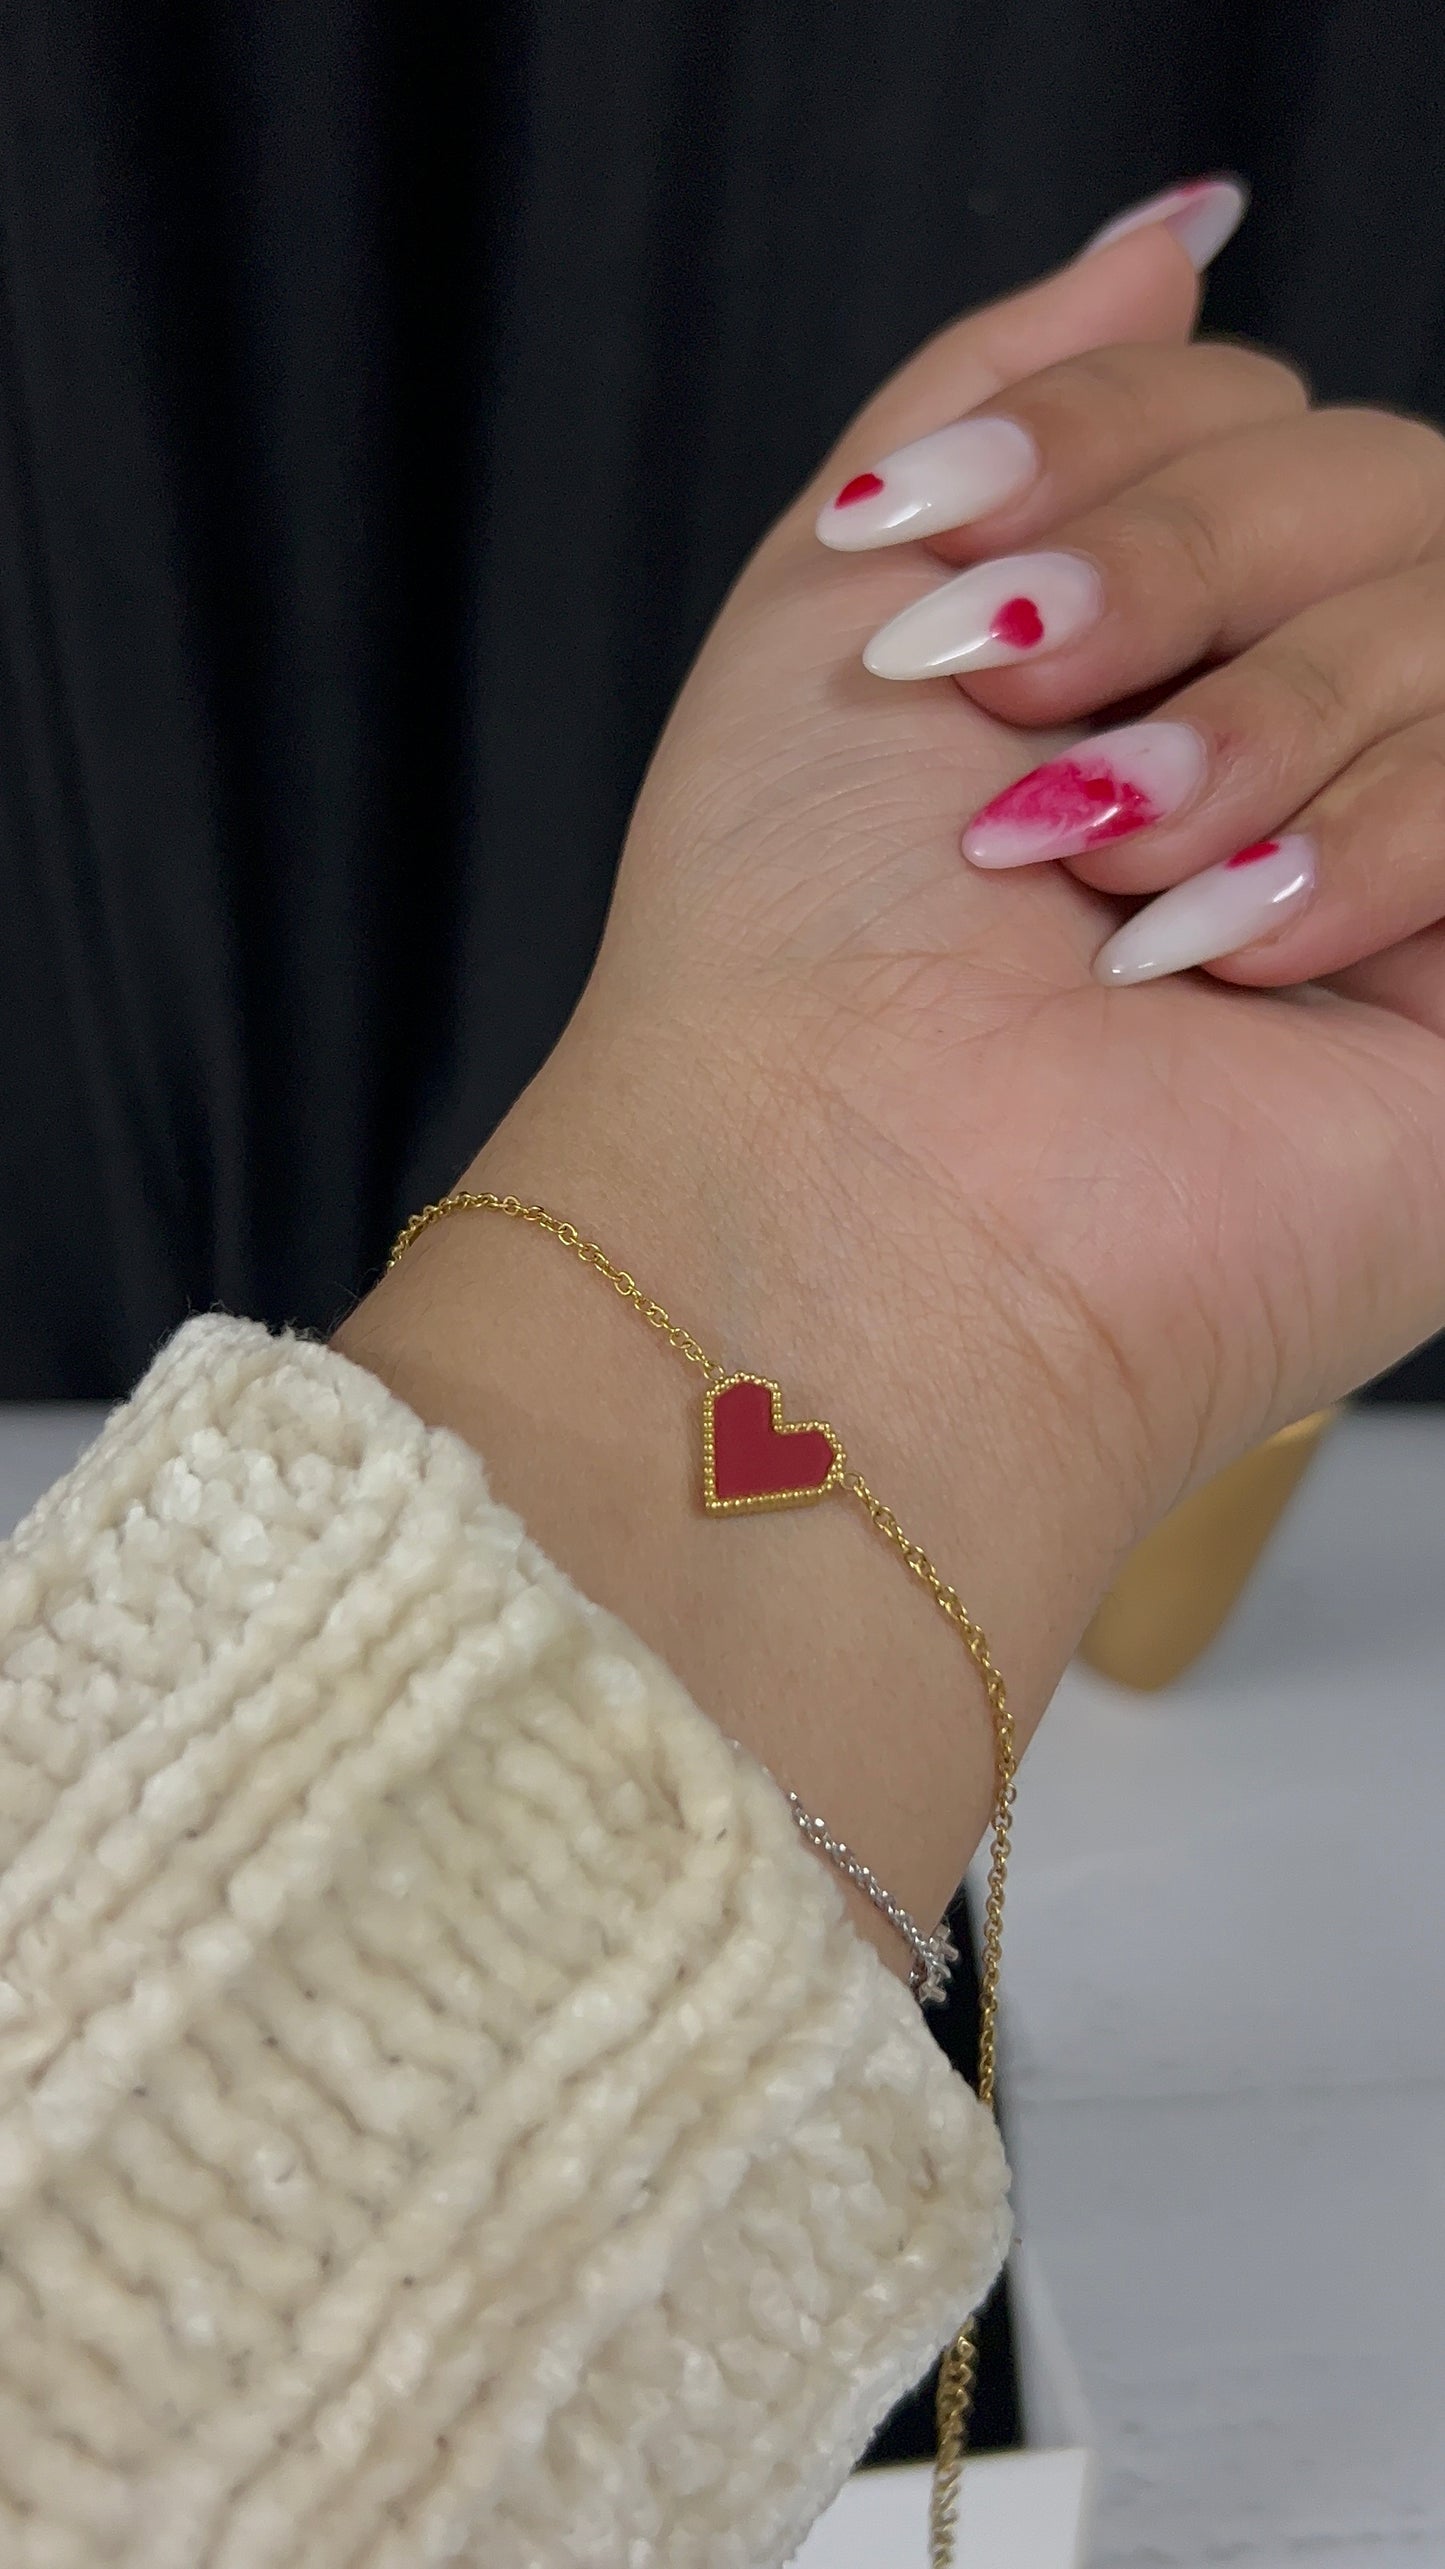 Princess heart bracelet